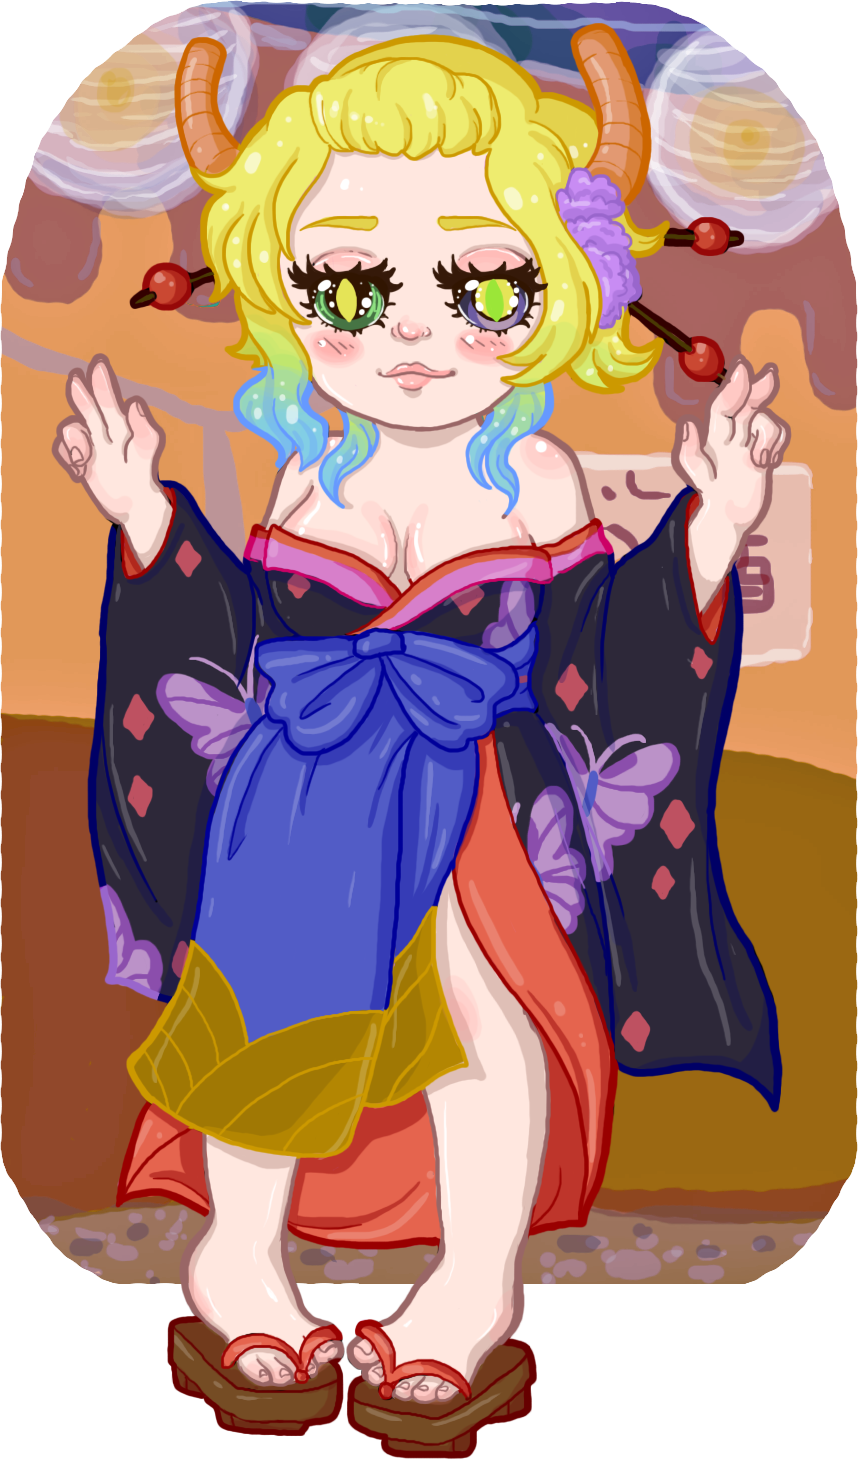 Cartoon Girl In A Kimono Holding A Lollipop